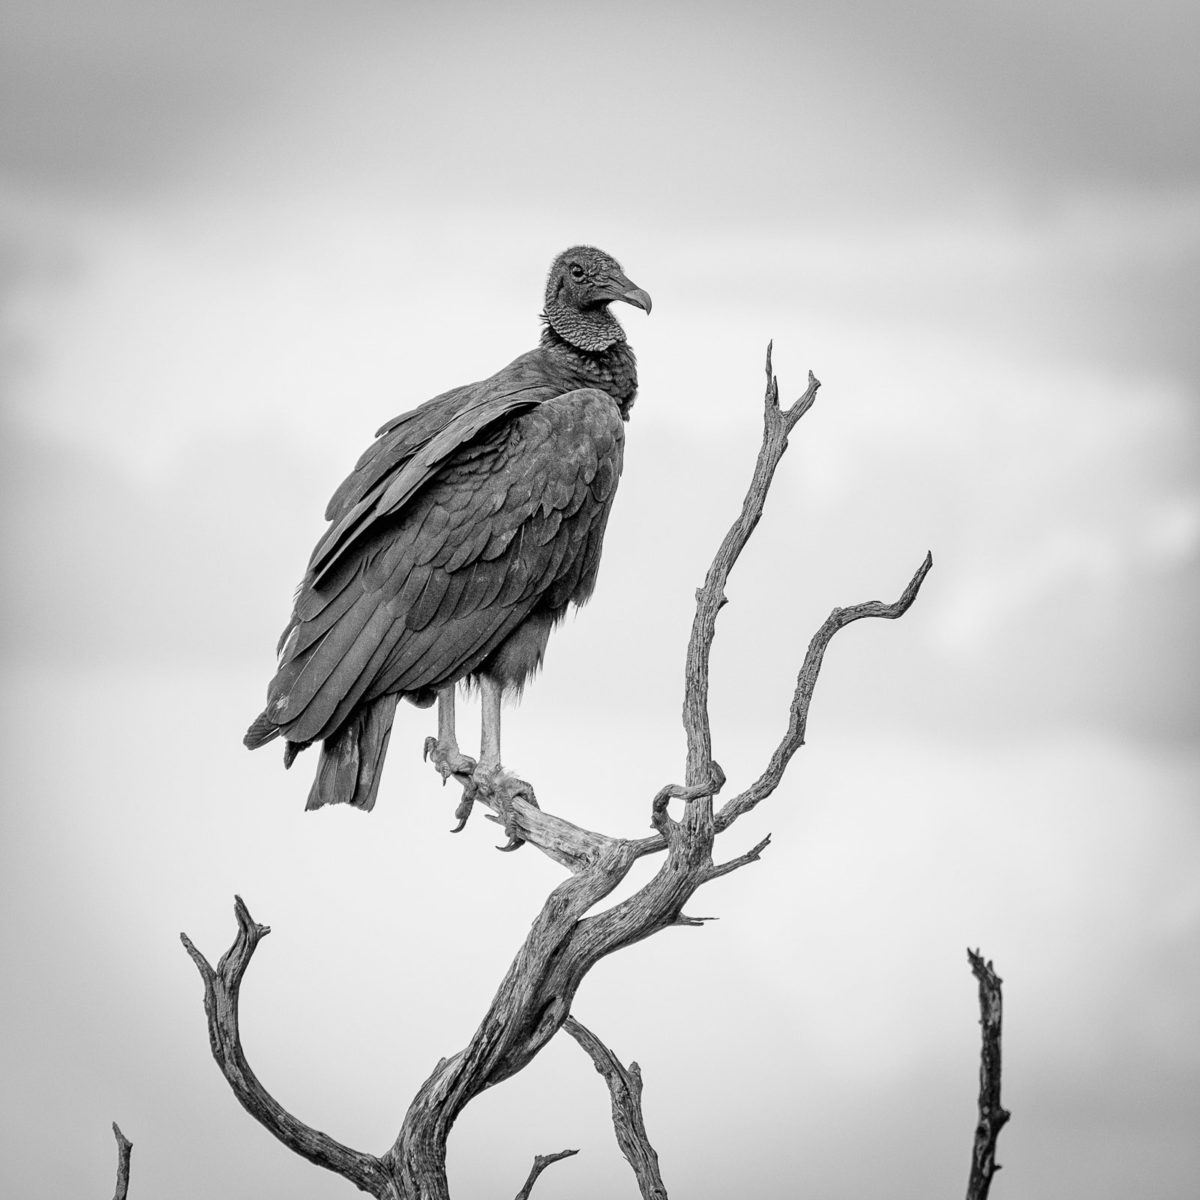 Old Baldy Buzzard - Black and White Photograph by Matt Mikulla